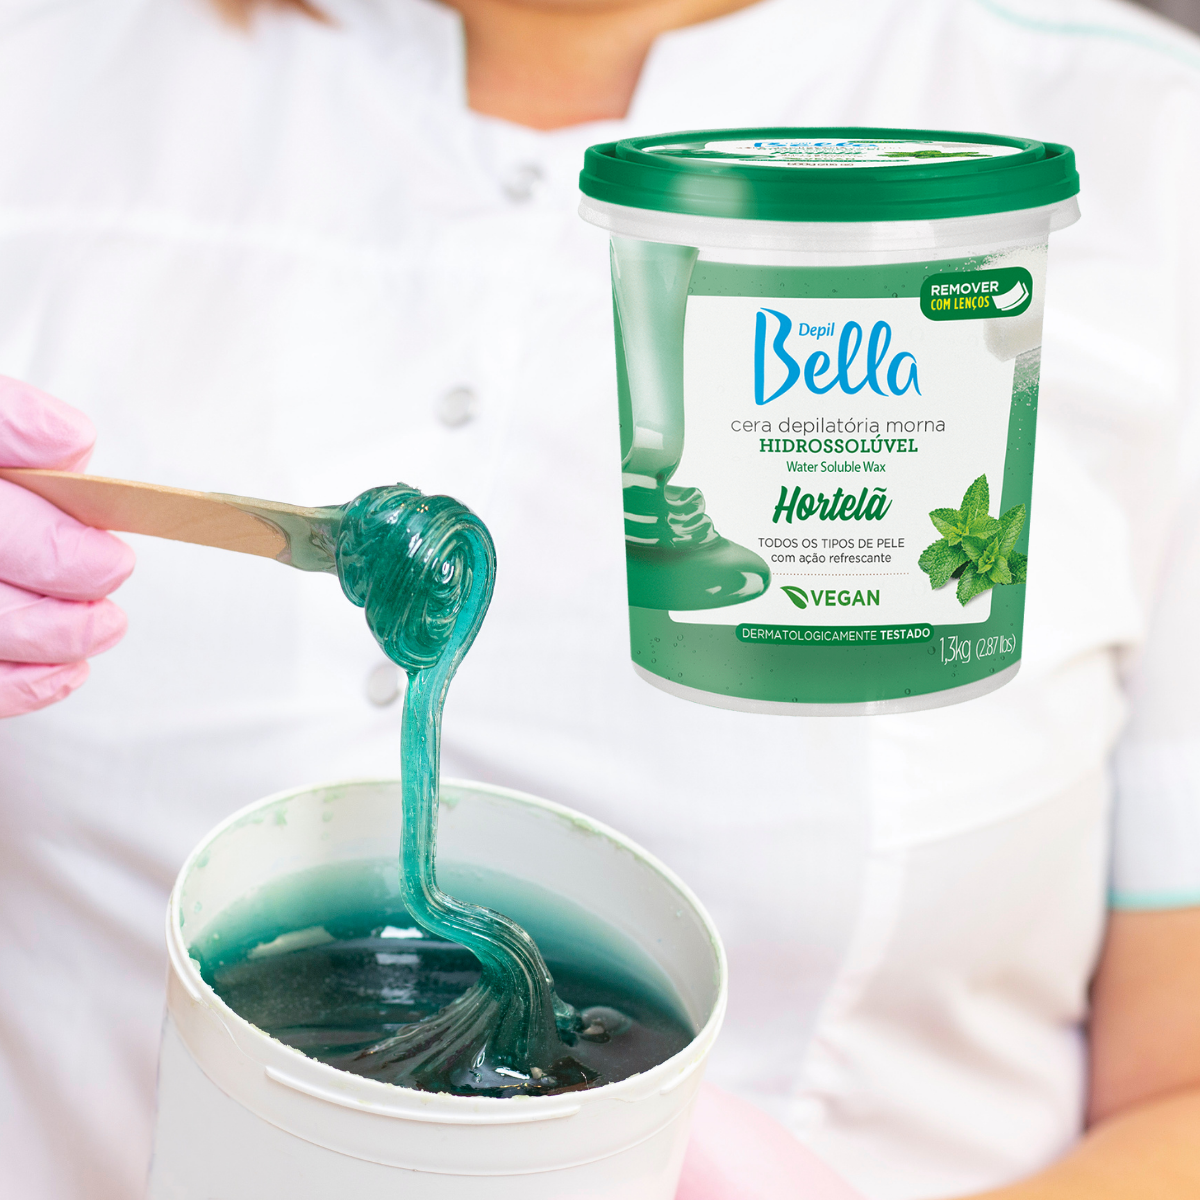 Depil Bella Full Body Sugar Wax Mint, Depiladora 1300g - depilcompany